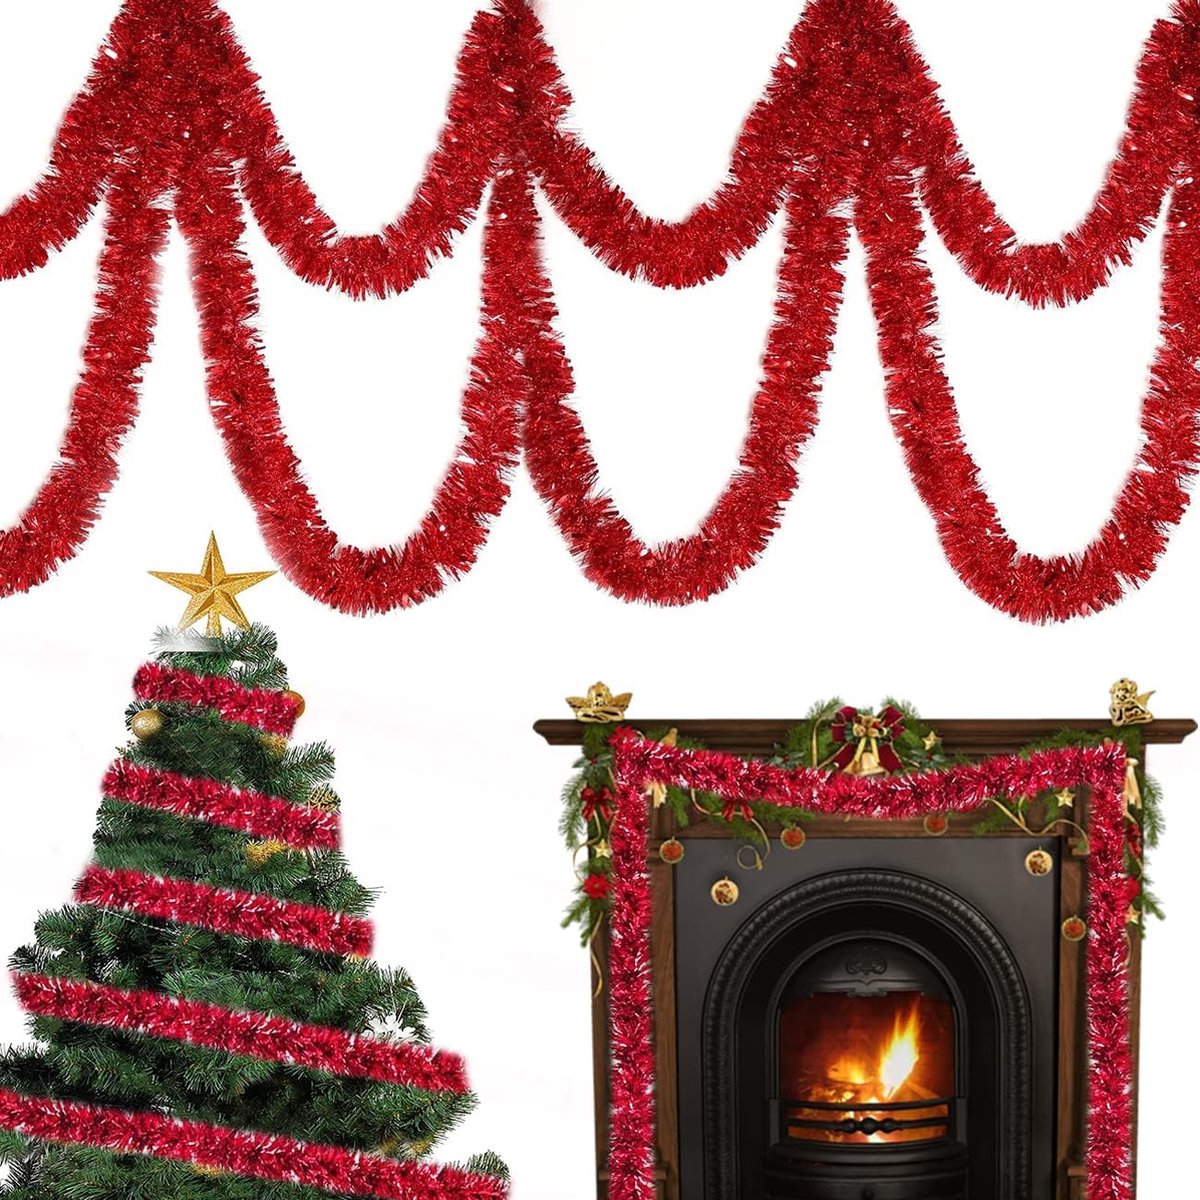 12 m kerstboom lamettaslinger, kerstboom slinger, zilver, lamettaslinger, kerstboom decoratie lametta, kerstboom decoratie slinger (rood)